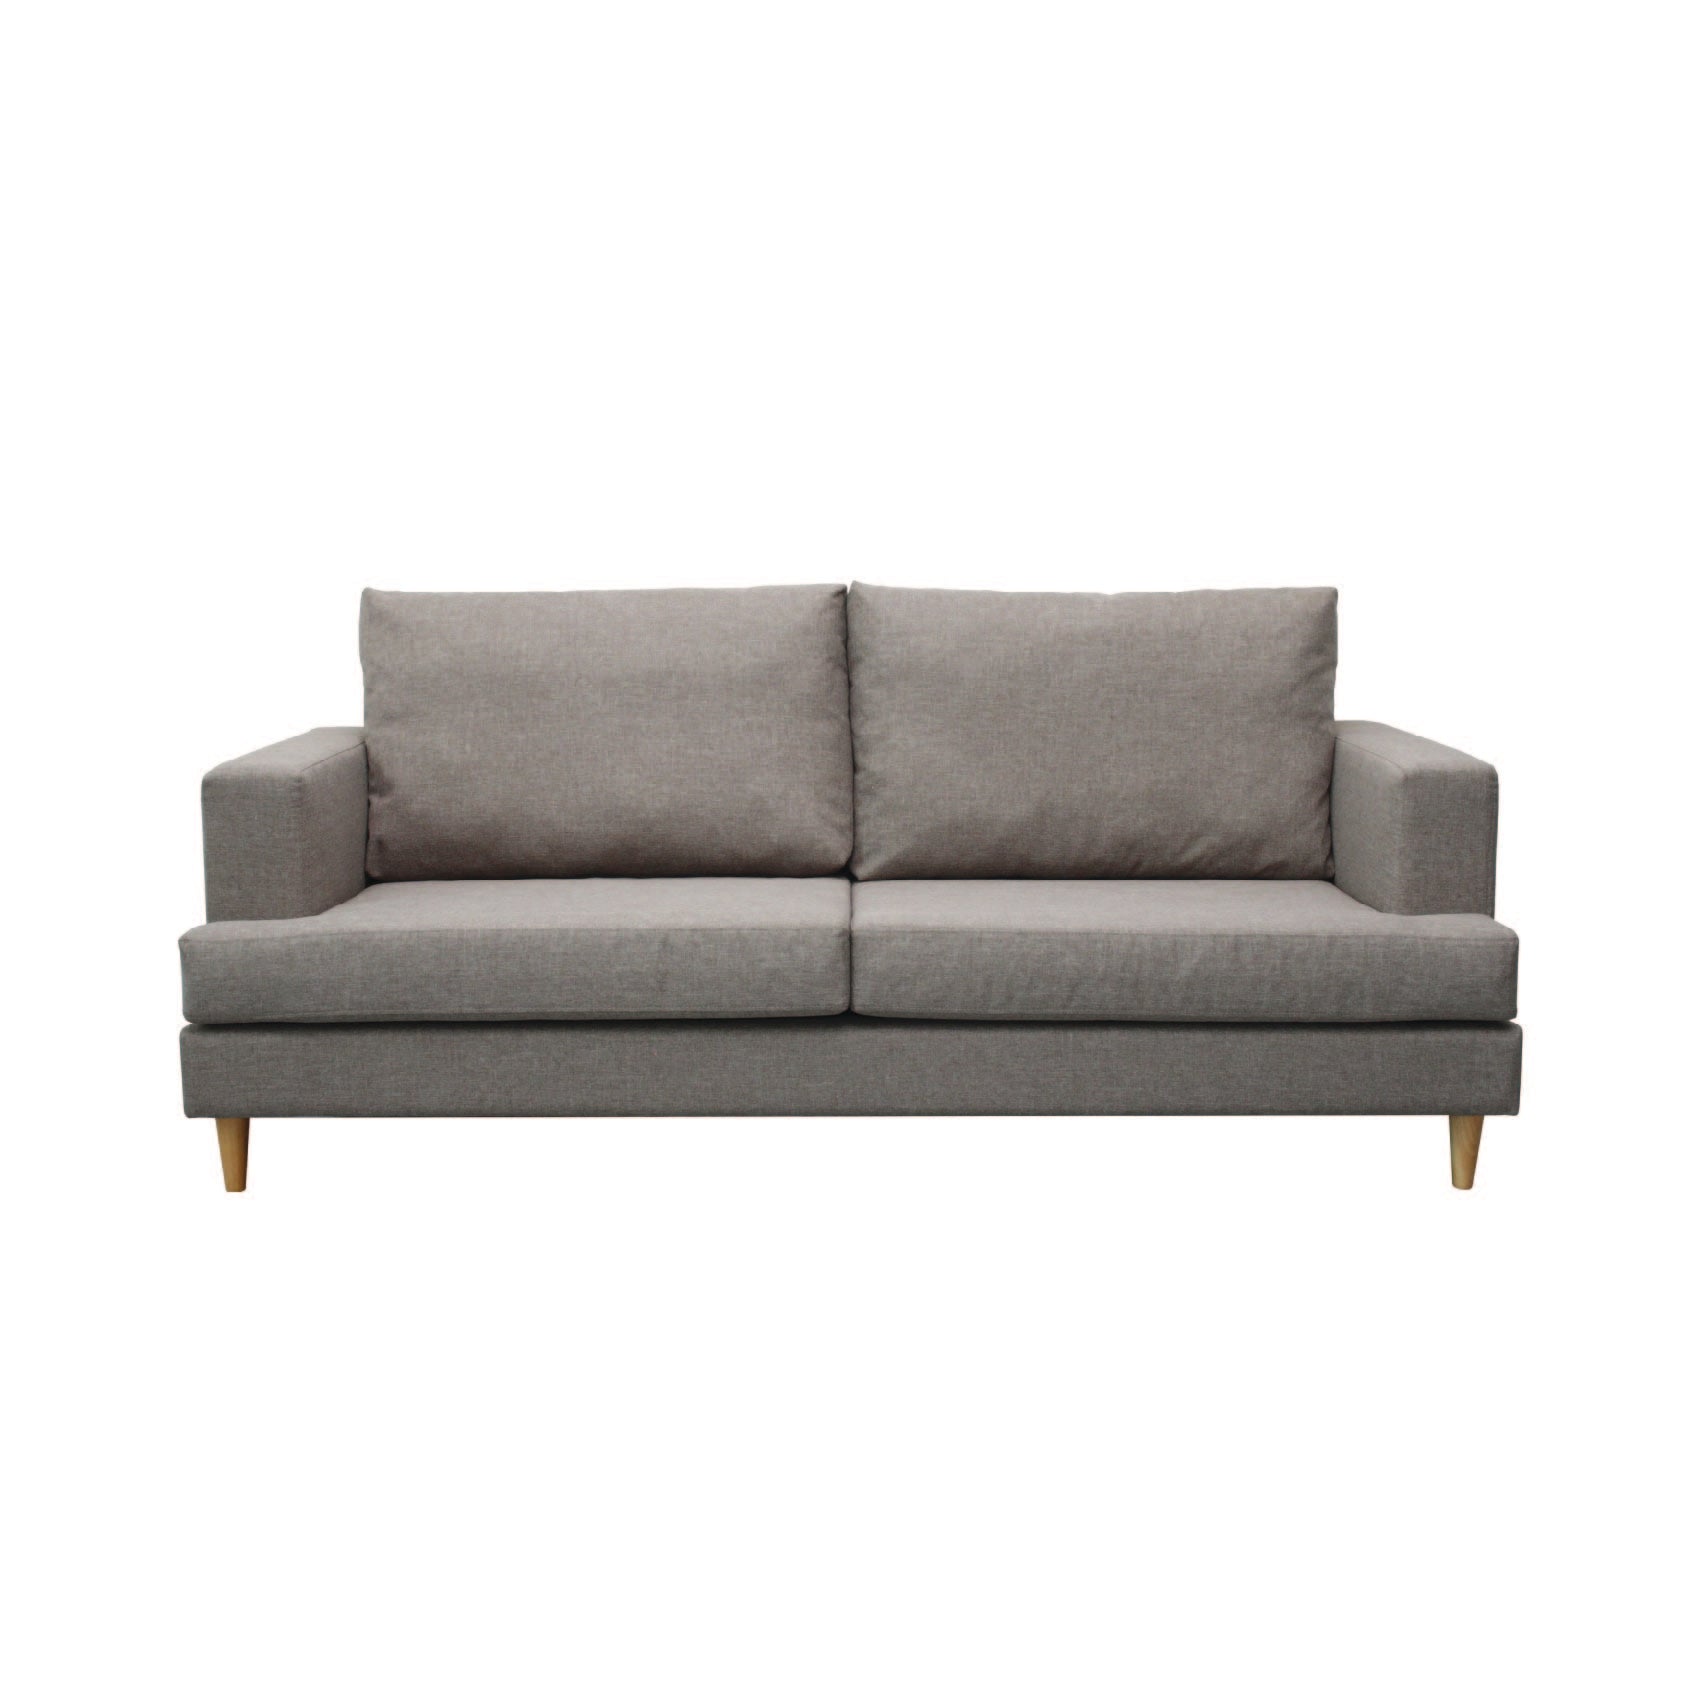 RANA Sofa 3 Seater in Grey Fabric